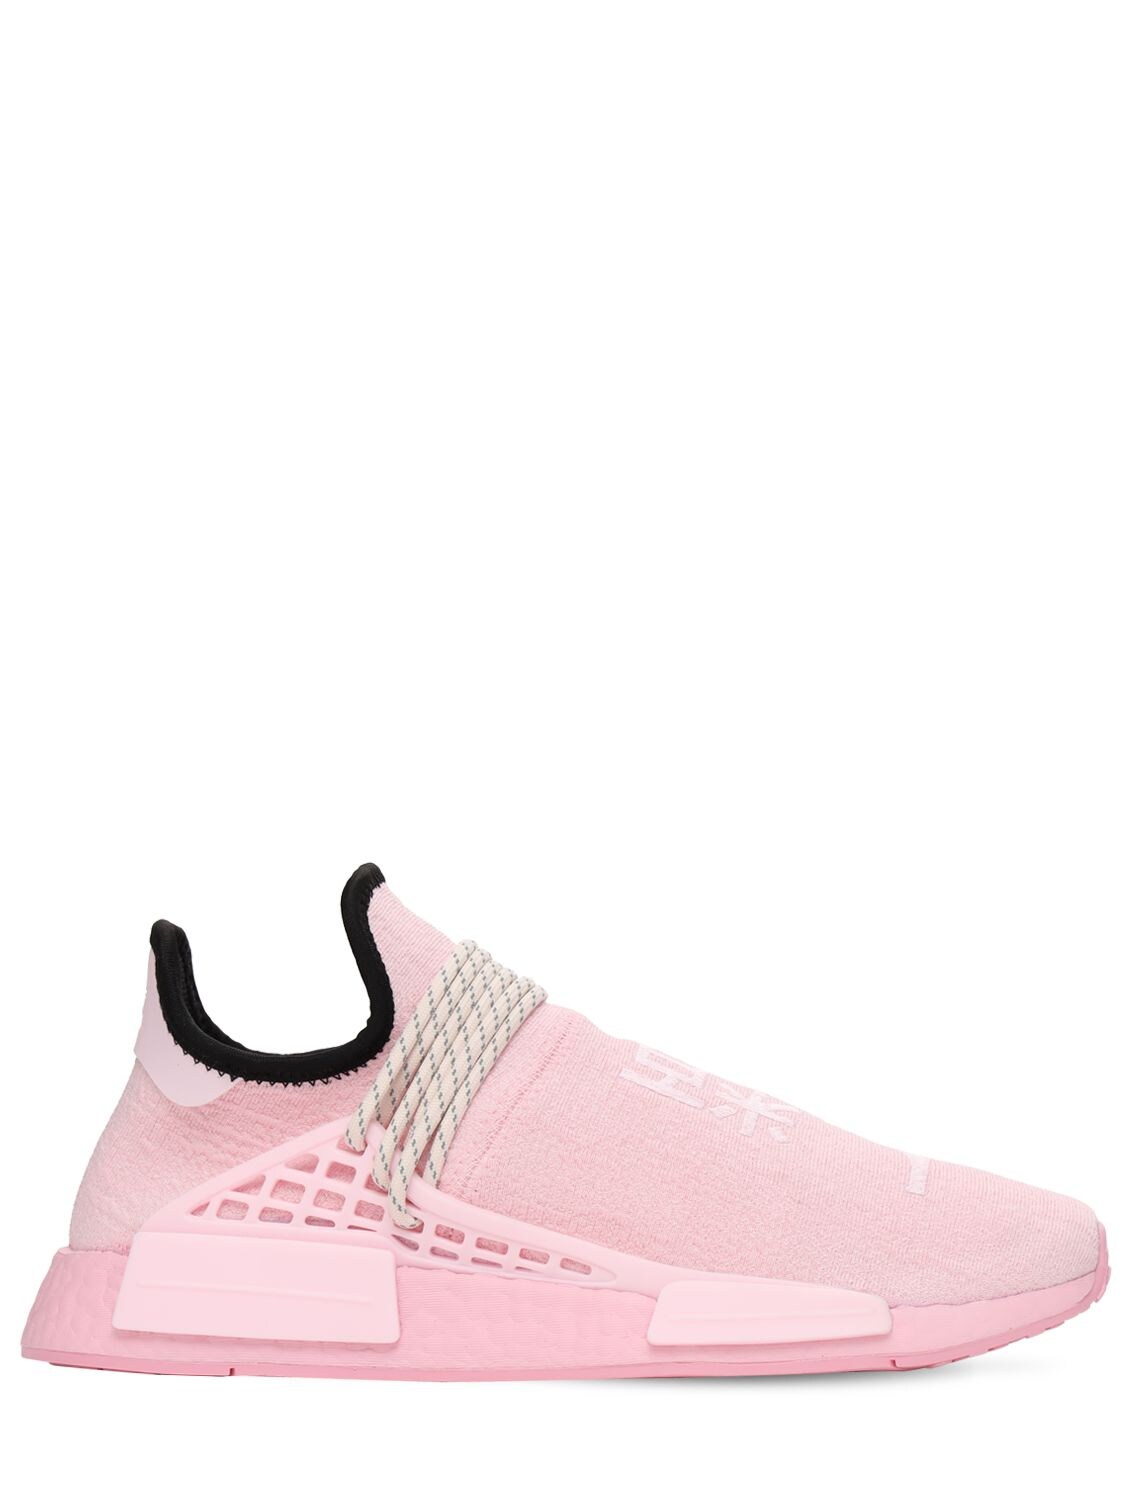 Adidas Originals Pharrell Williams Hu Nmd Rubber-trimmed Primeknit Sneakers In True Pink